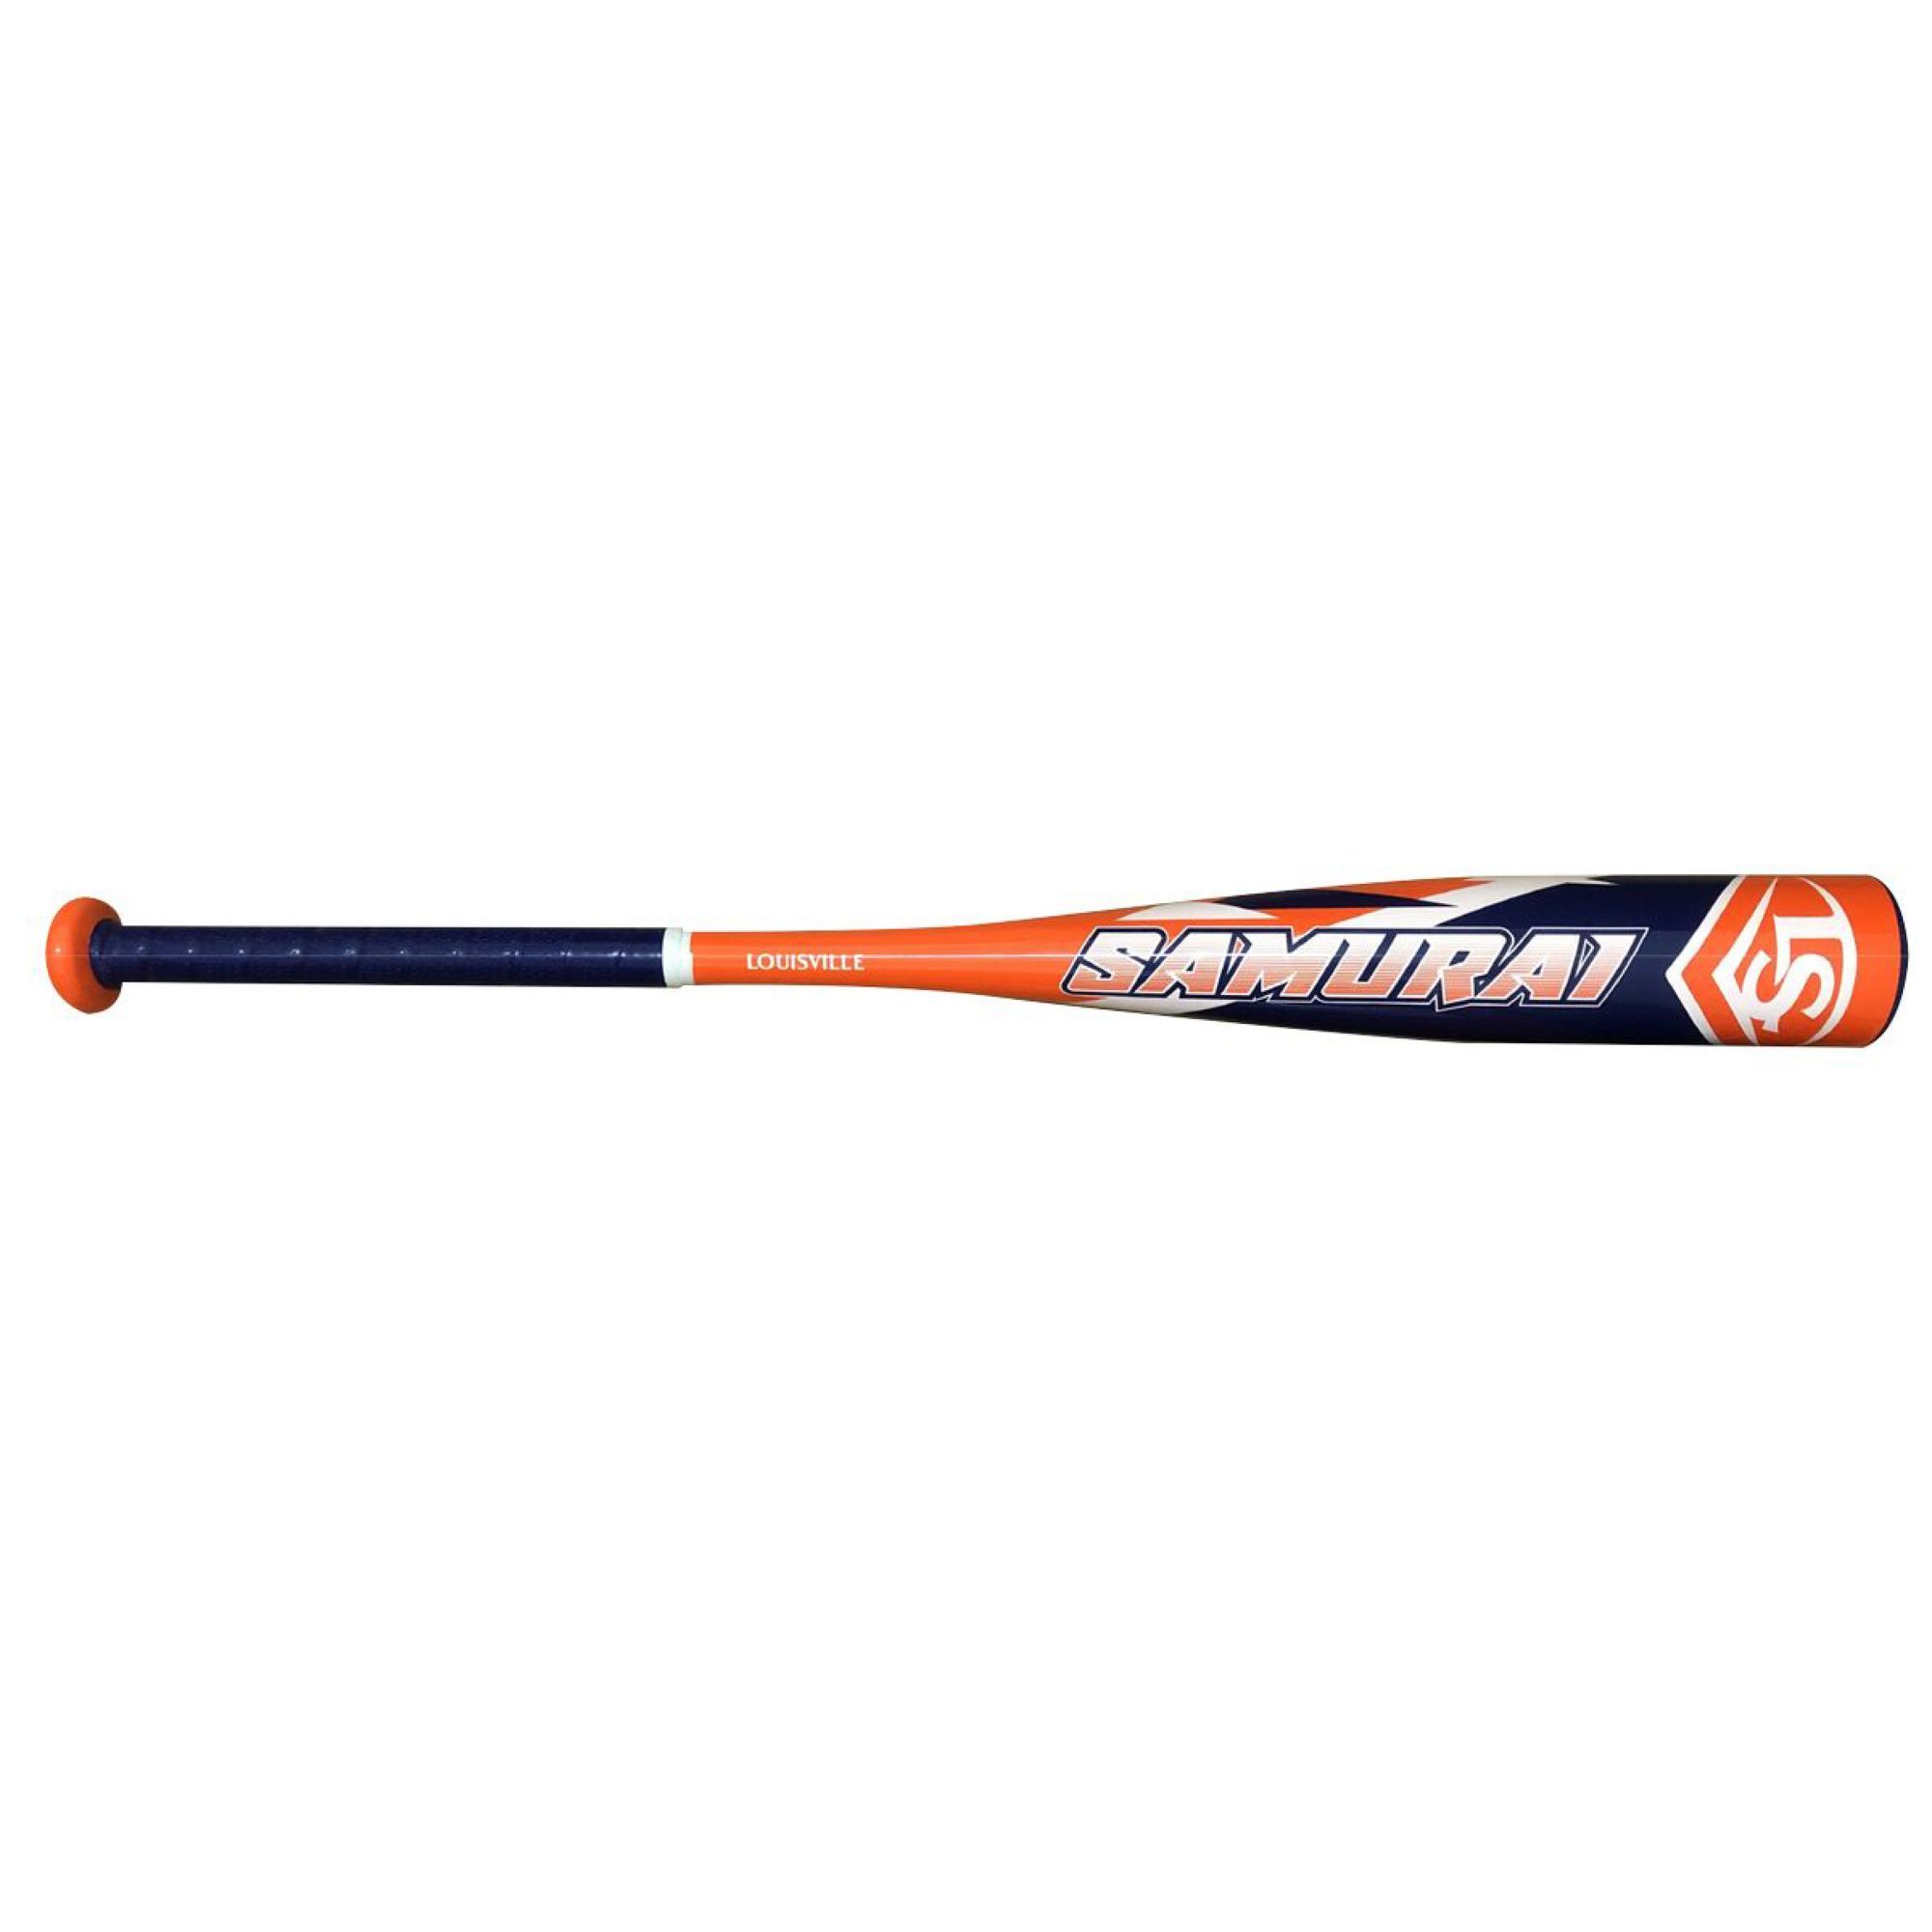 Image of Louisville Samurai 2022 Baseball Bat